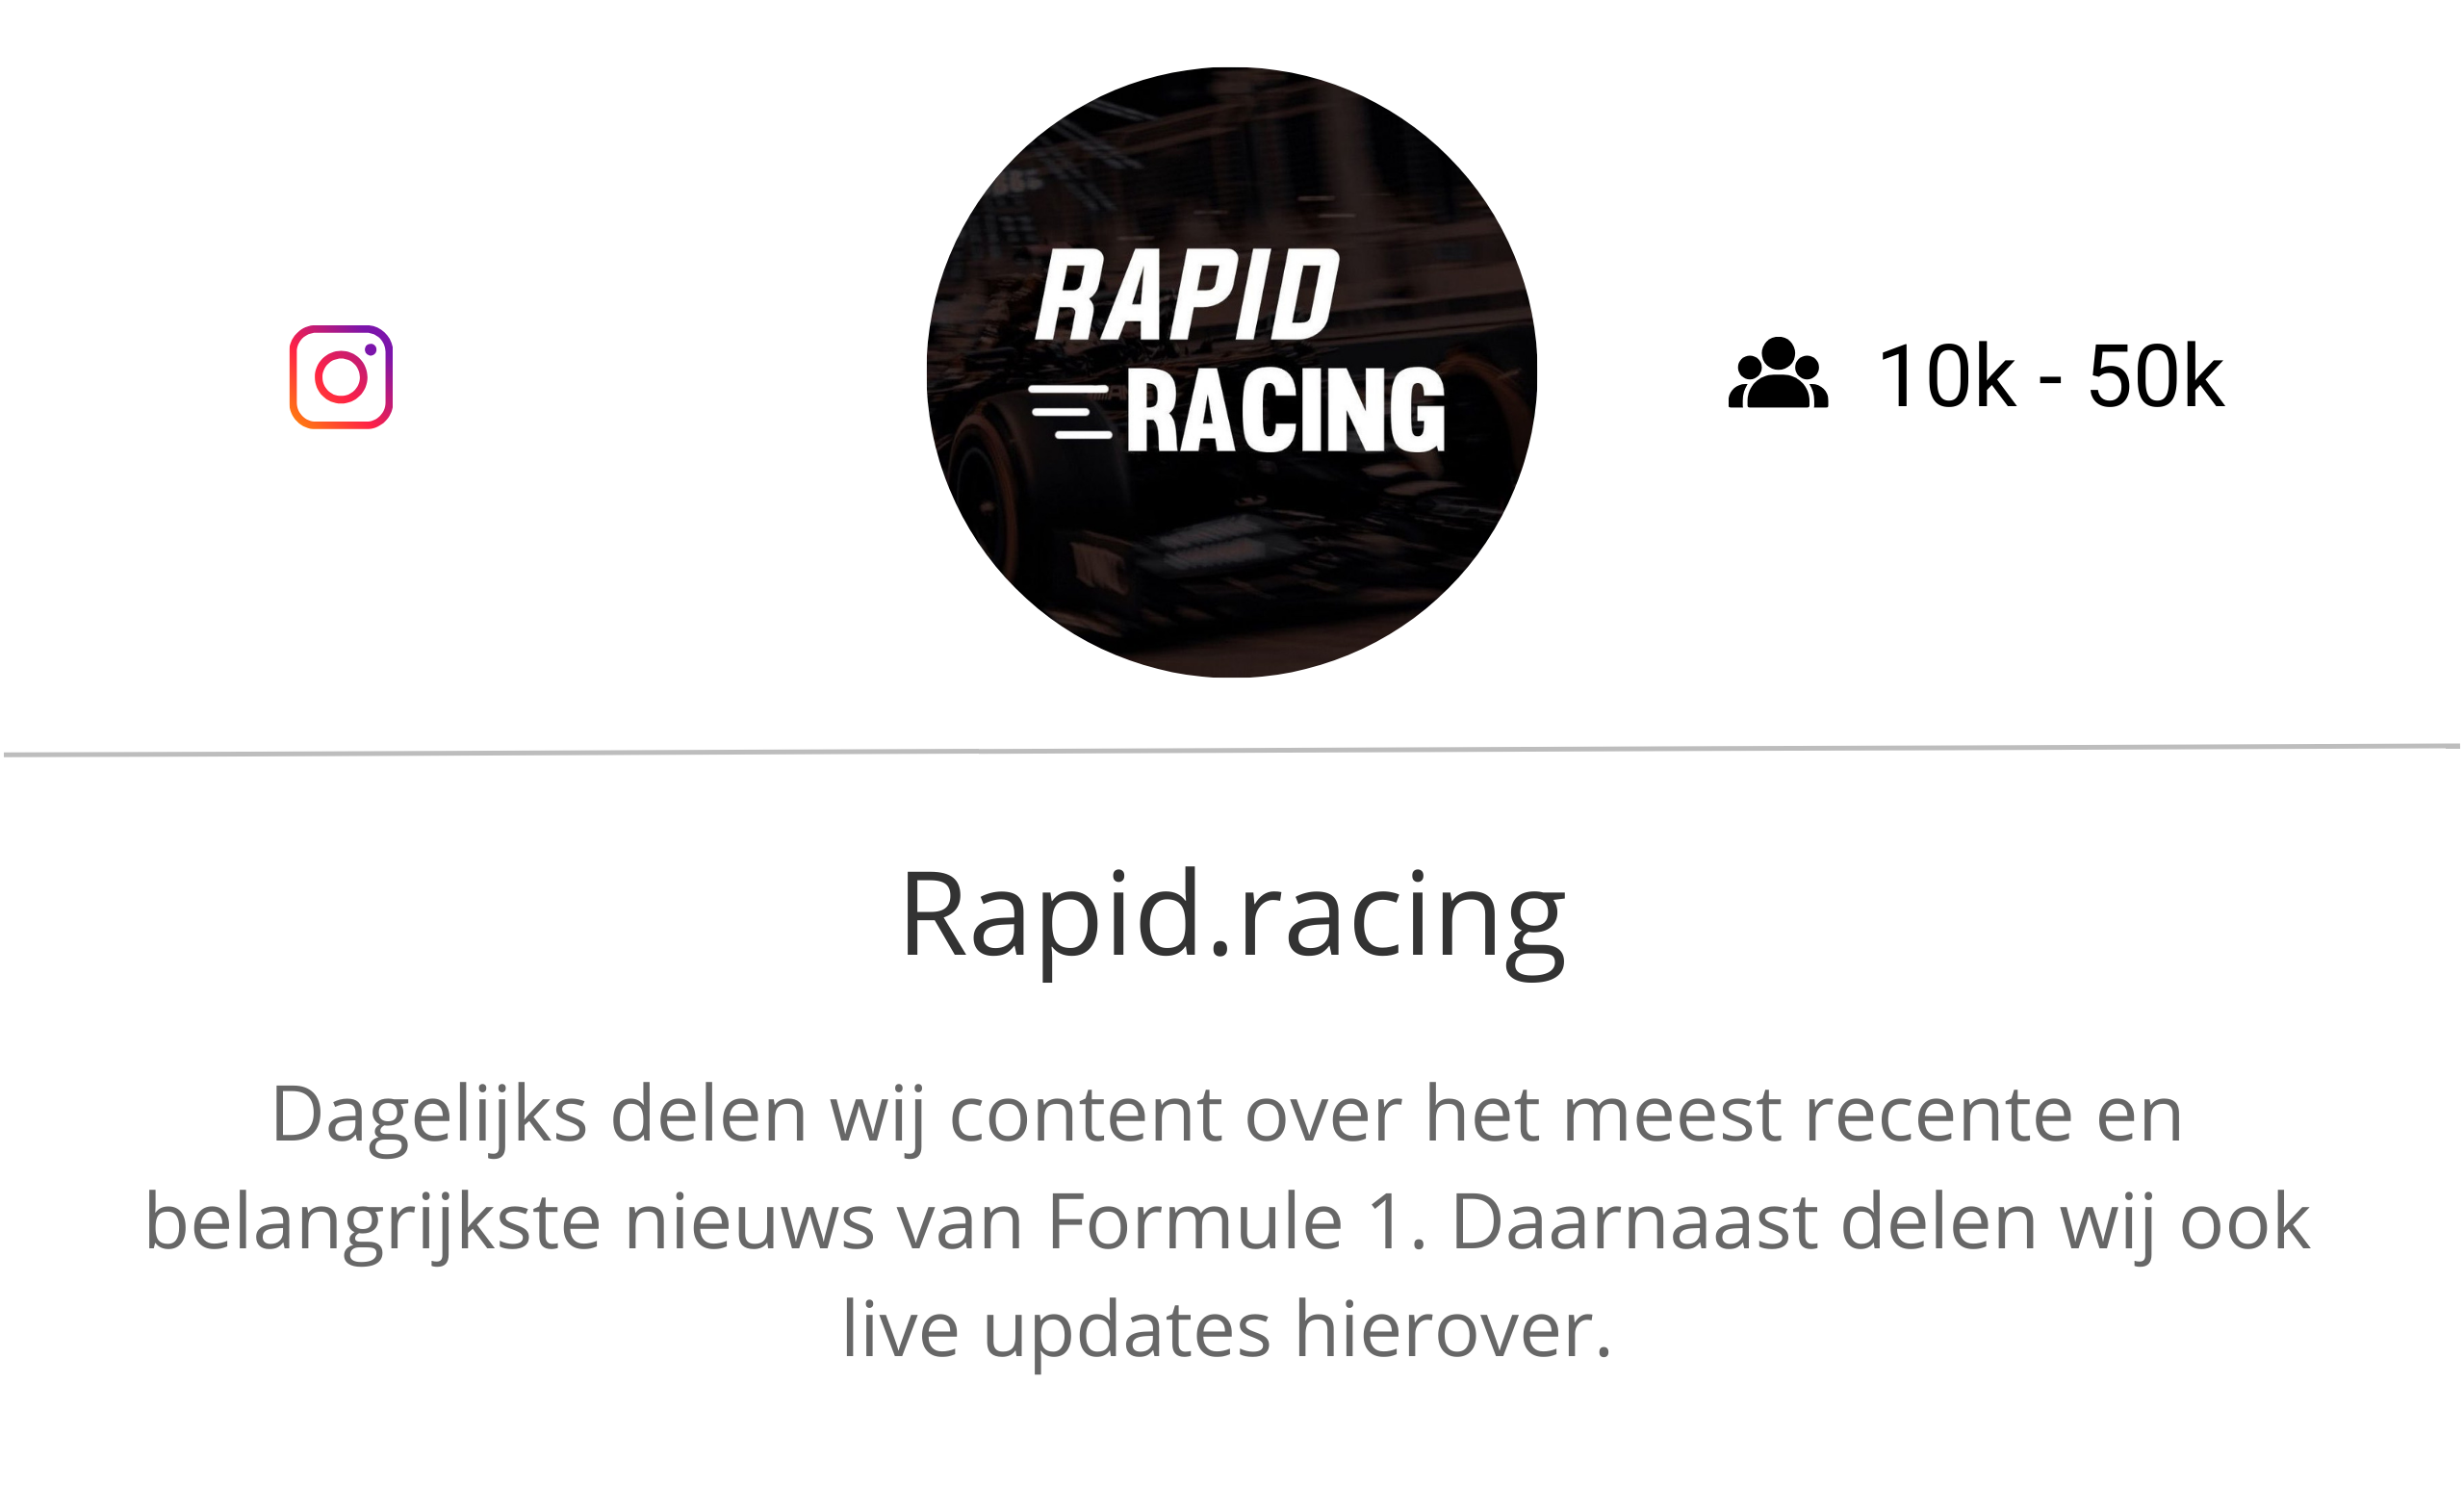 Rapid.racing